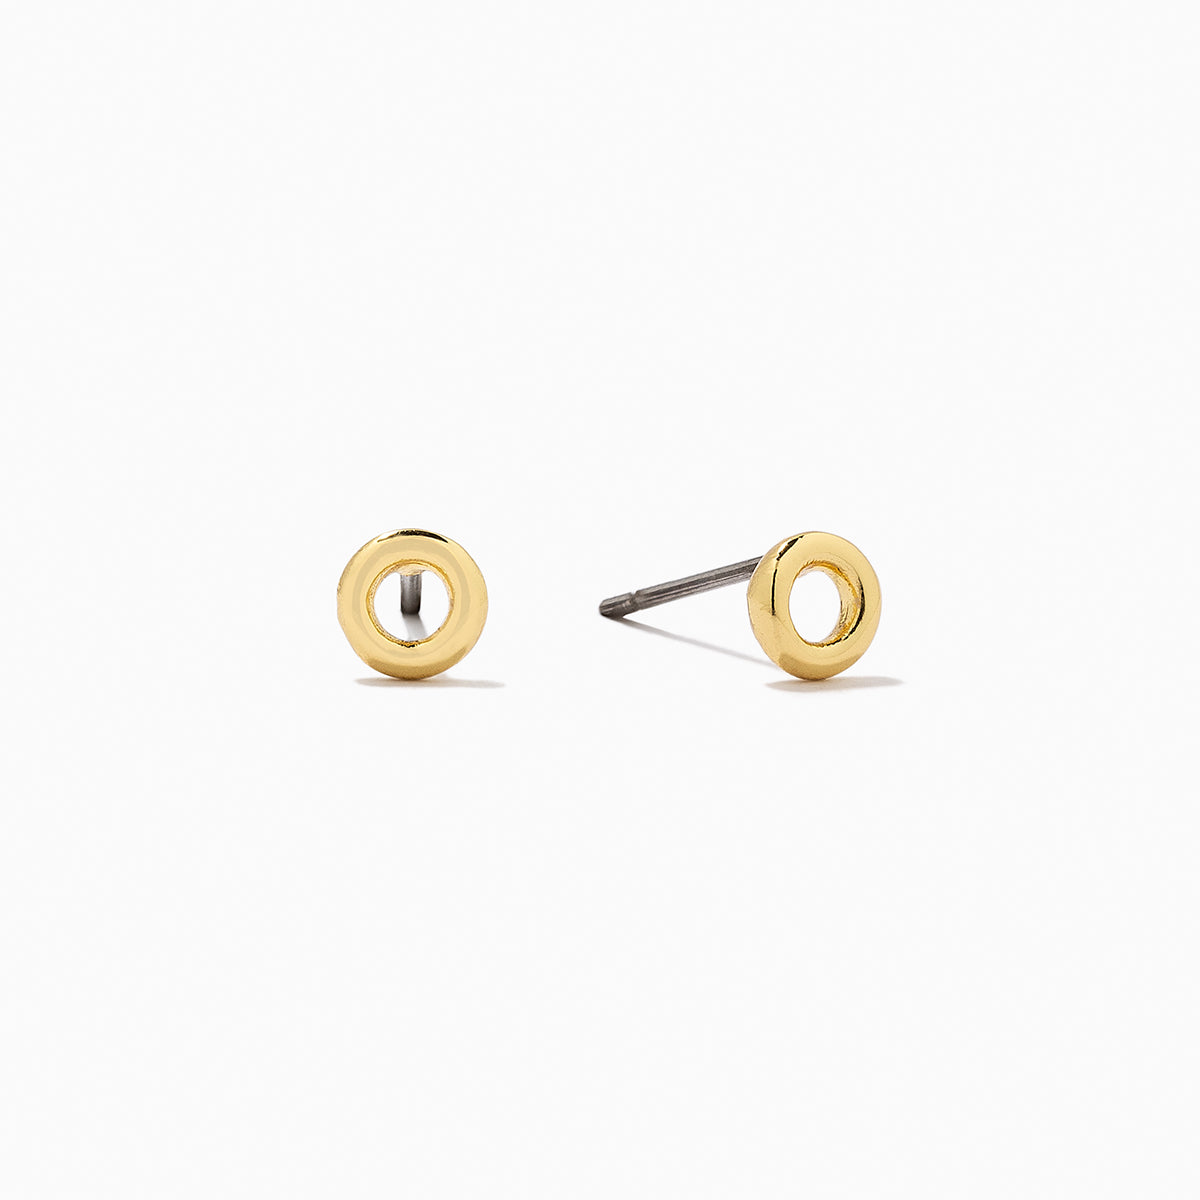 Sunshine Stud Earrings | Gold | Product Image | Uncommon James